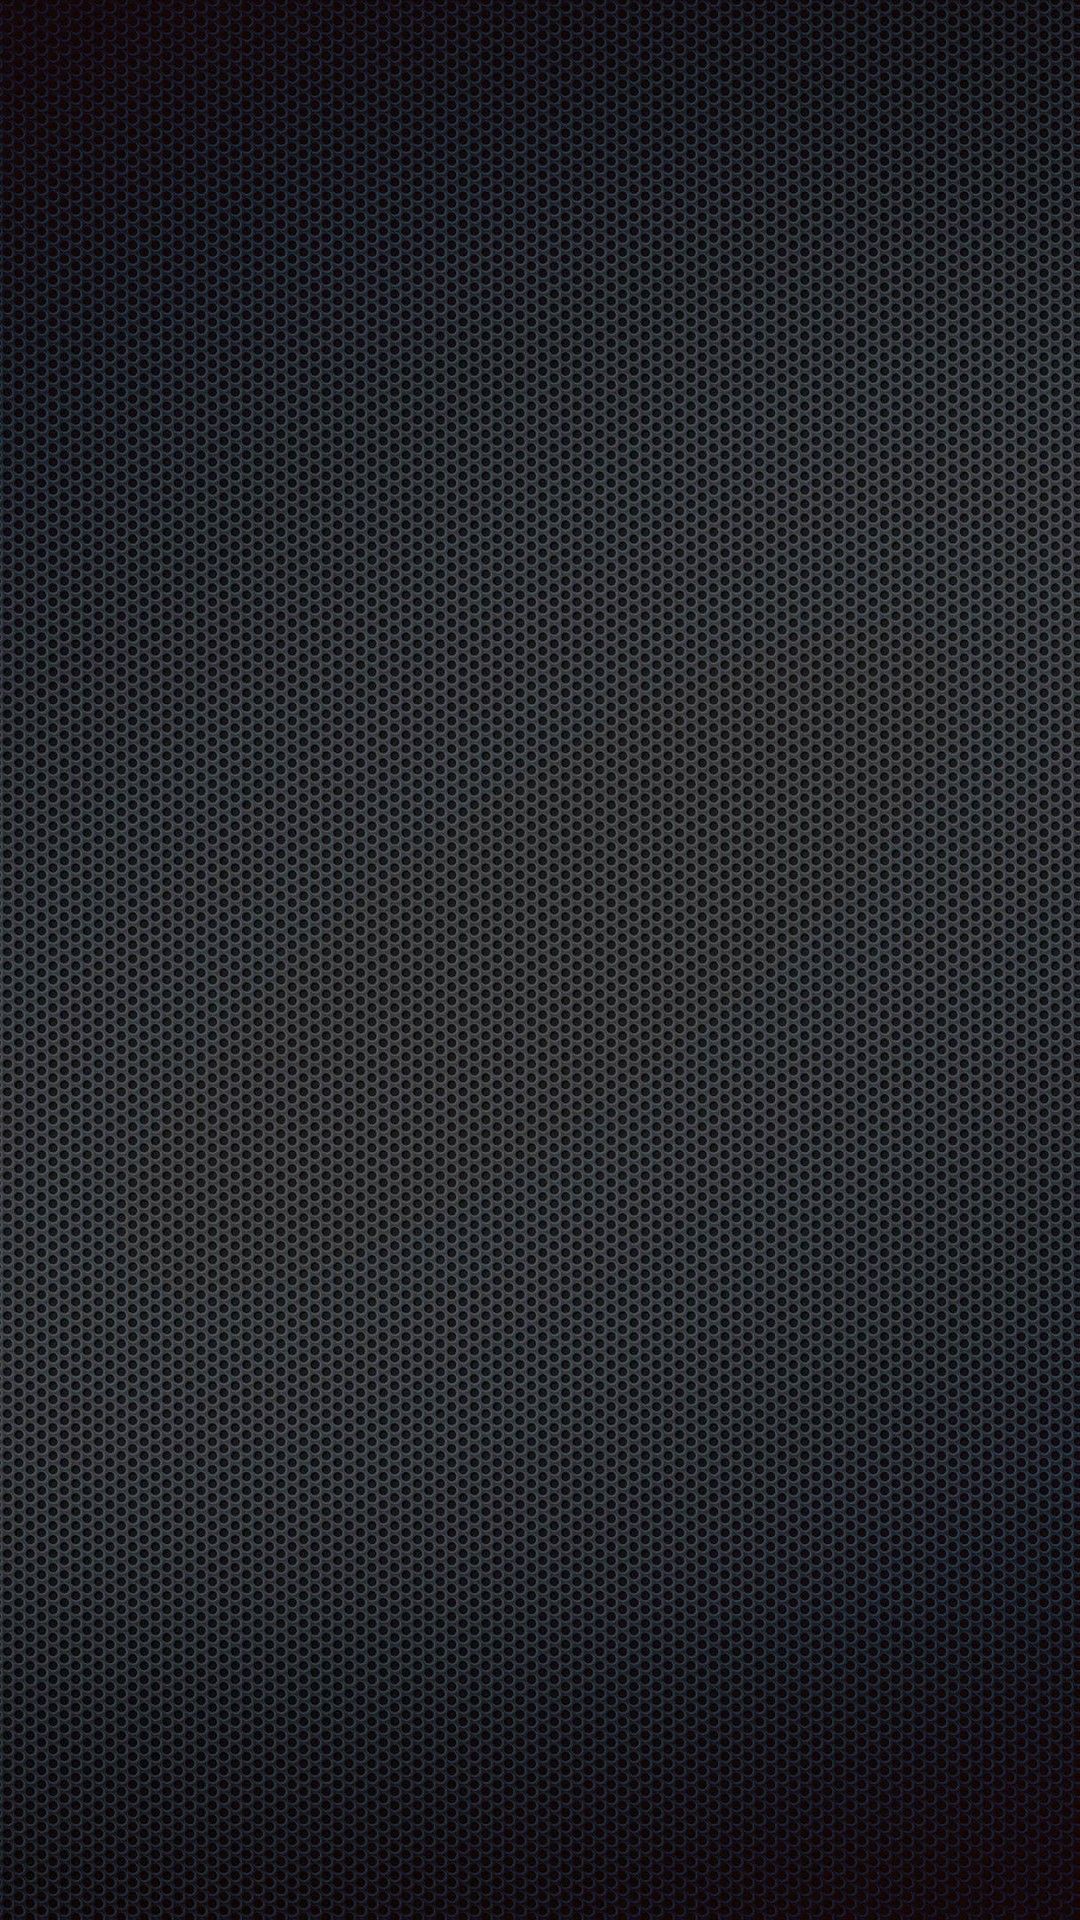 Black Samsung Wallpapers